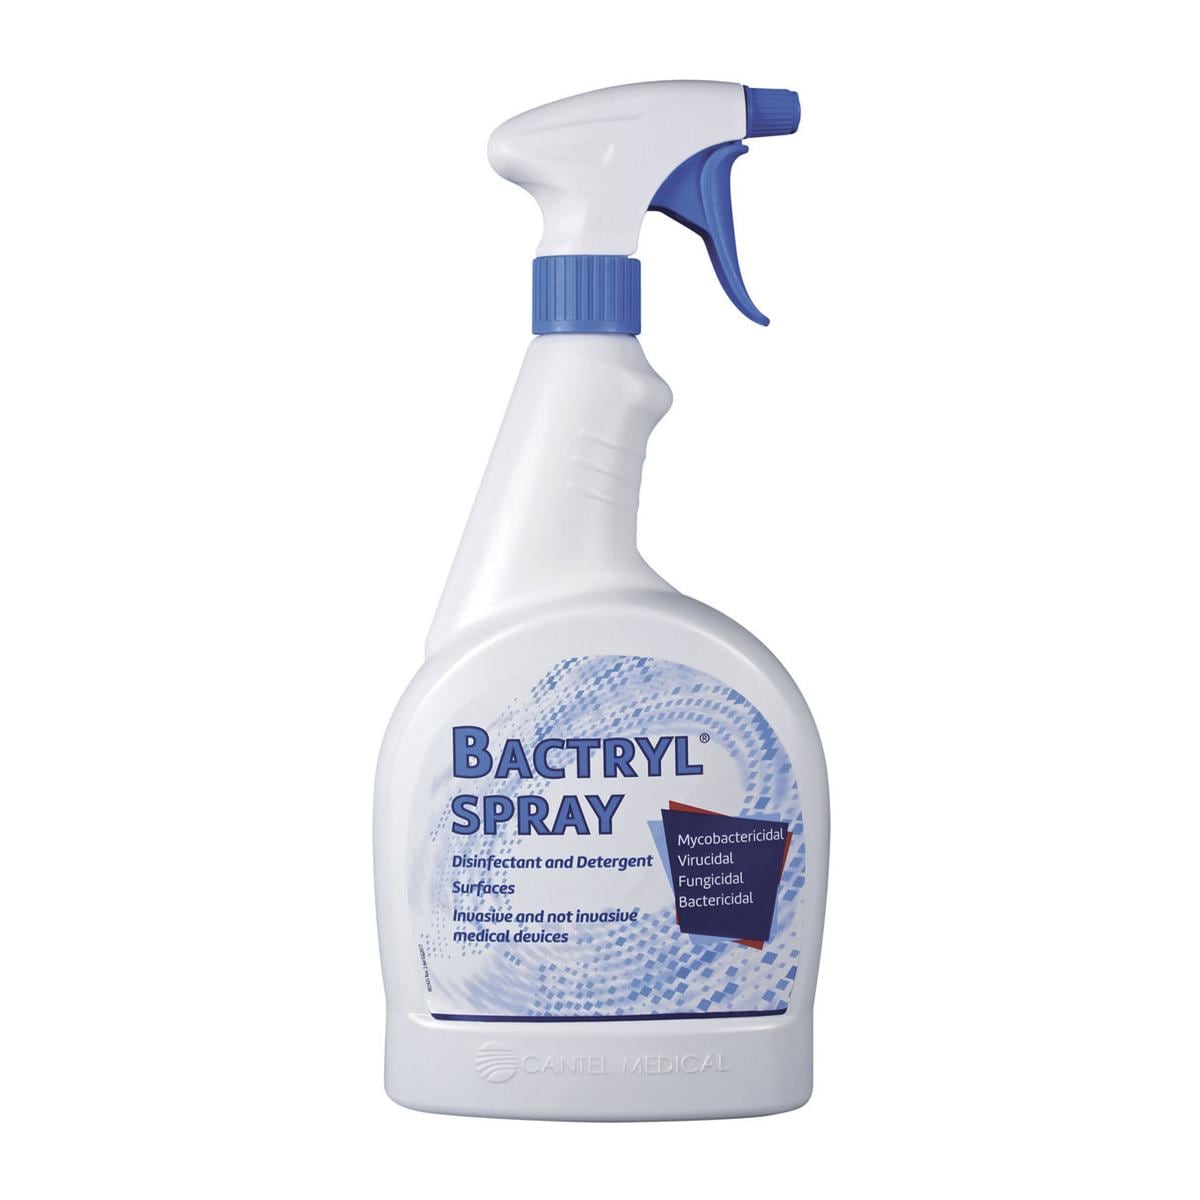 Bactryl Spray - Fles, 4x 1 liter + 2 spraykoppen